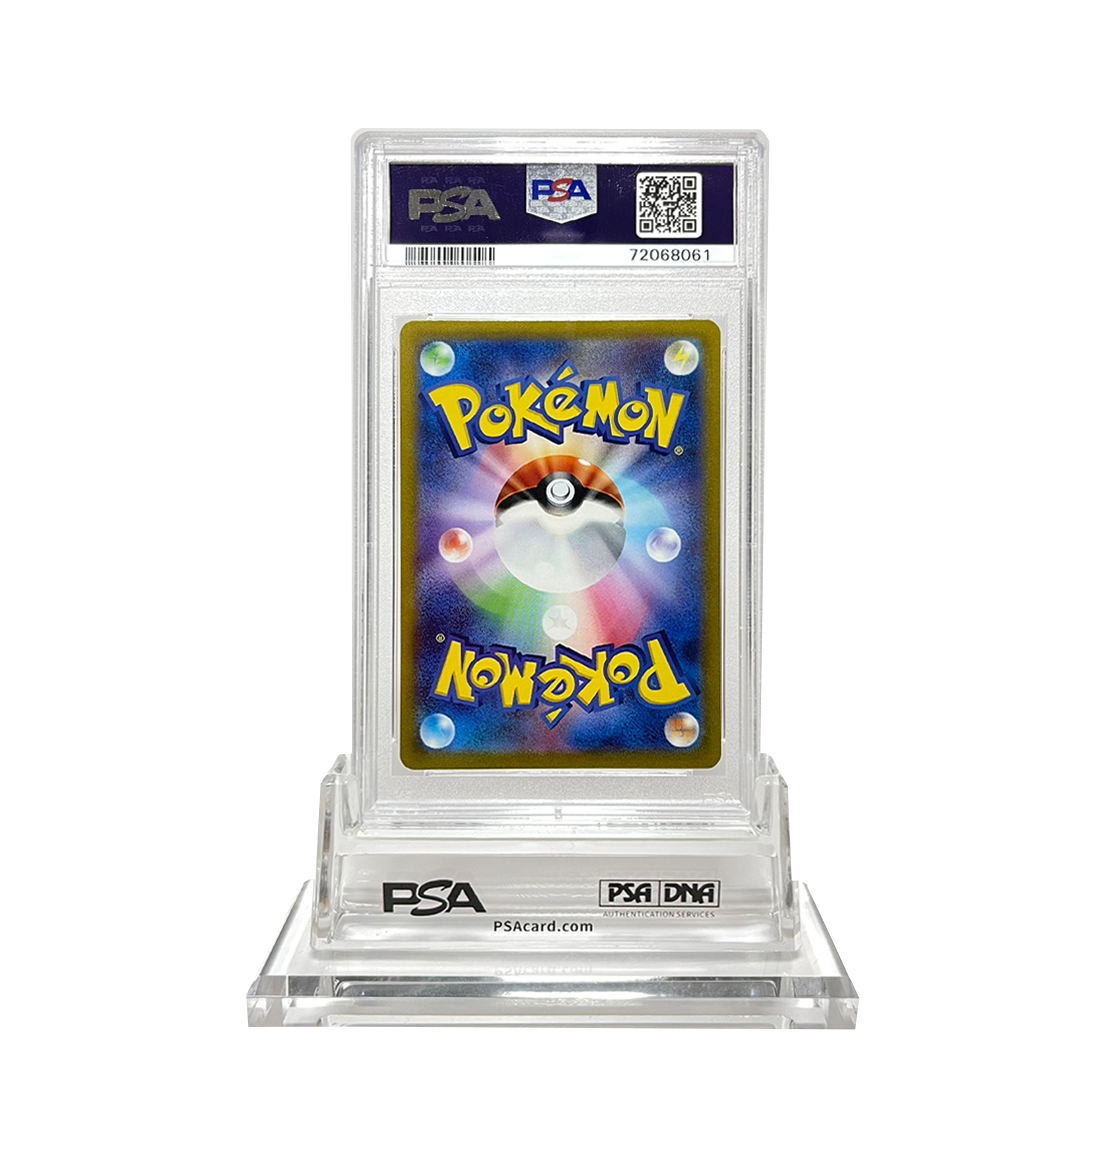 PSA 10 Graded Pawmot SV1V 085 Pokemon card